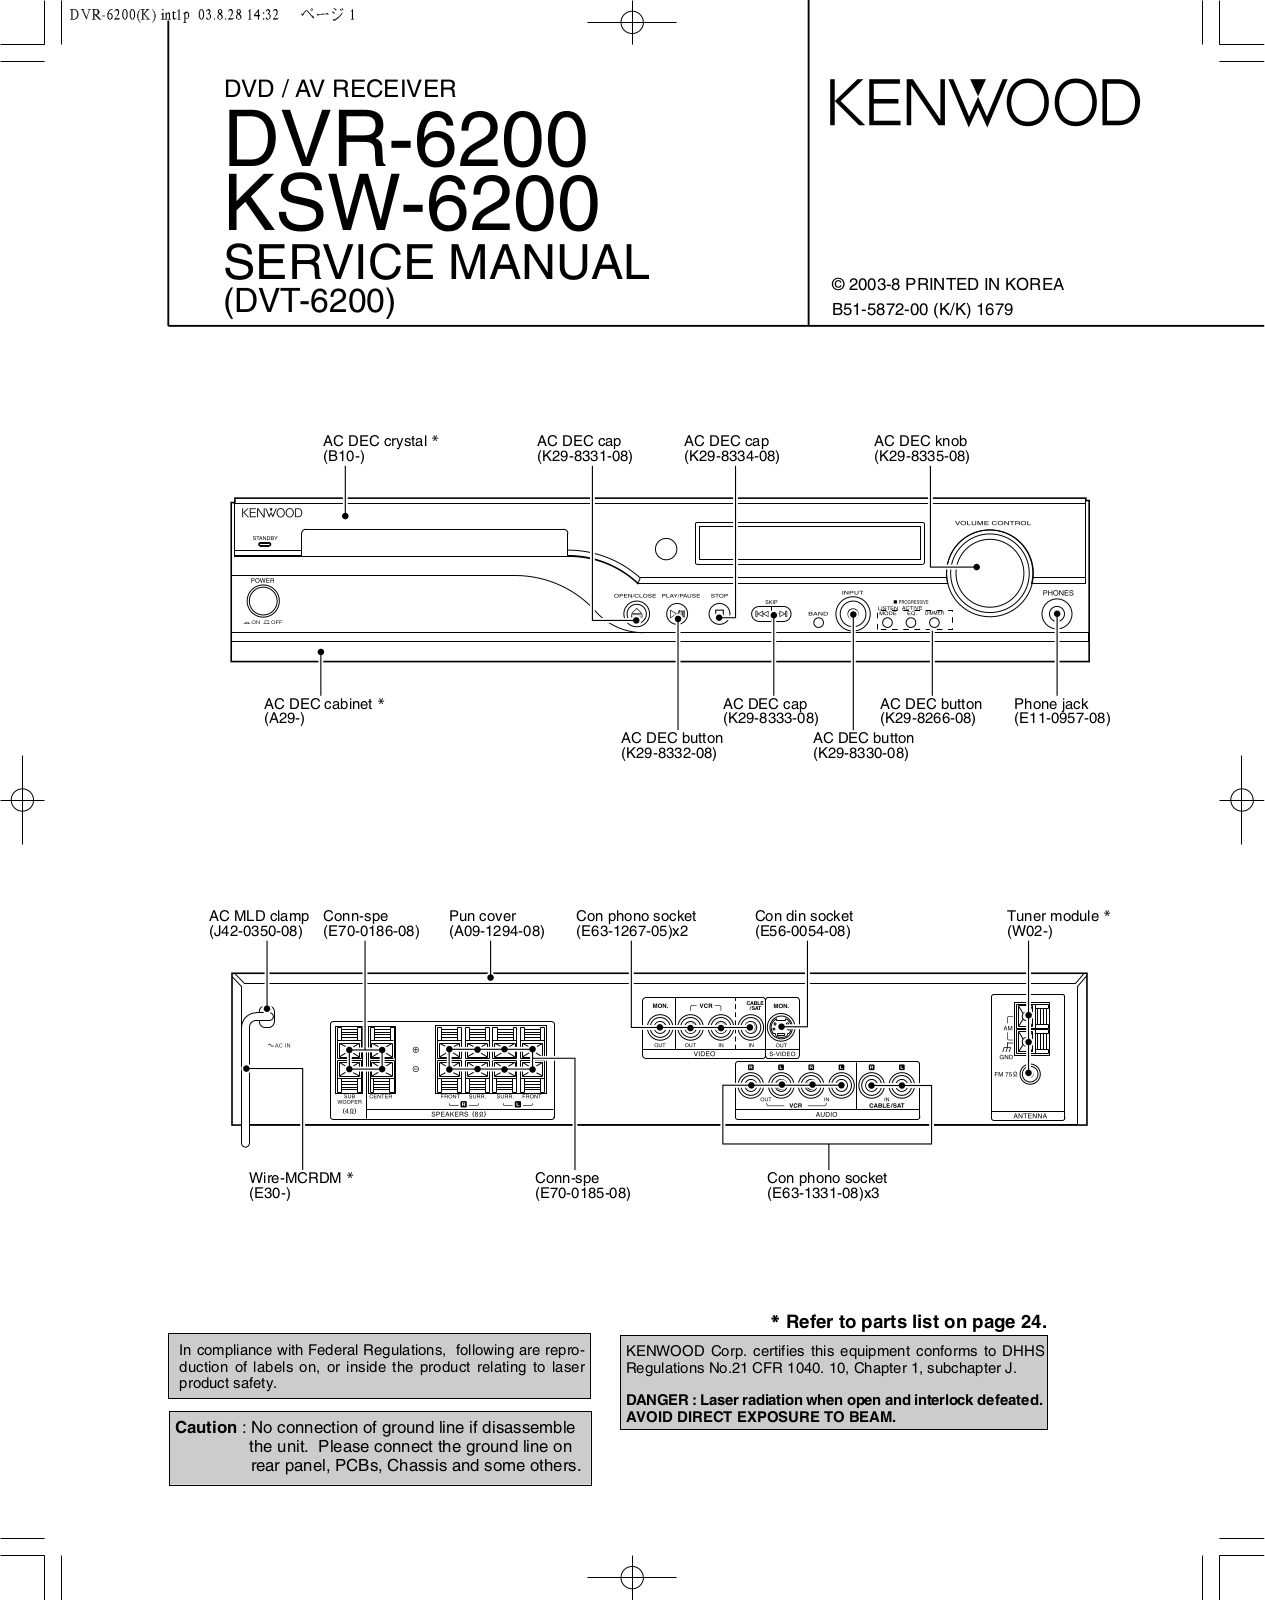 Kenwood KSW-6200, DVR-6200 Service manual